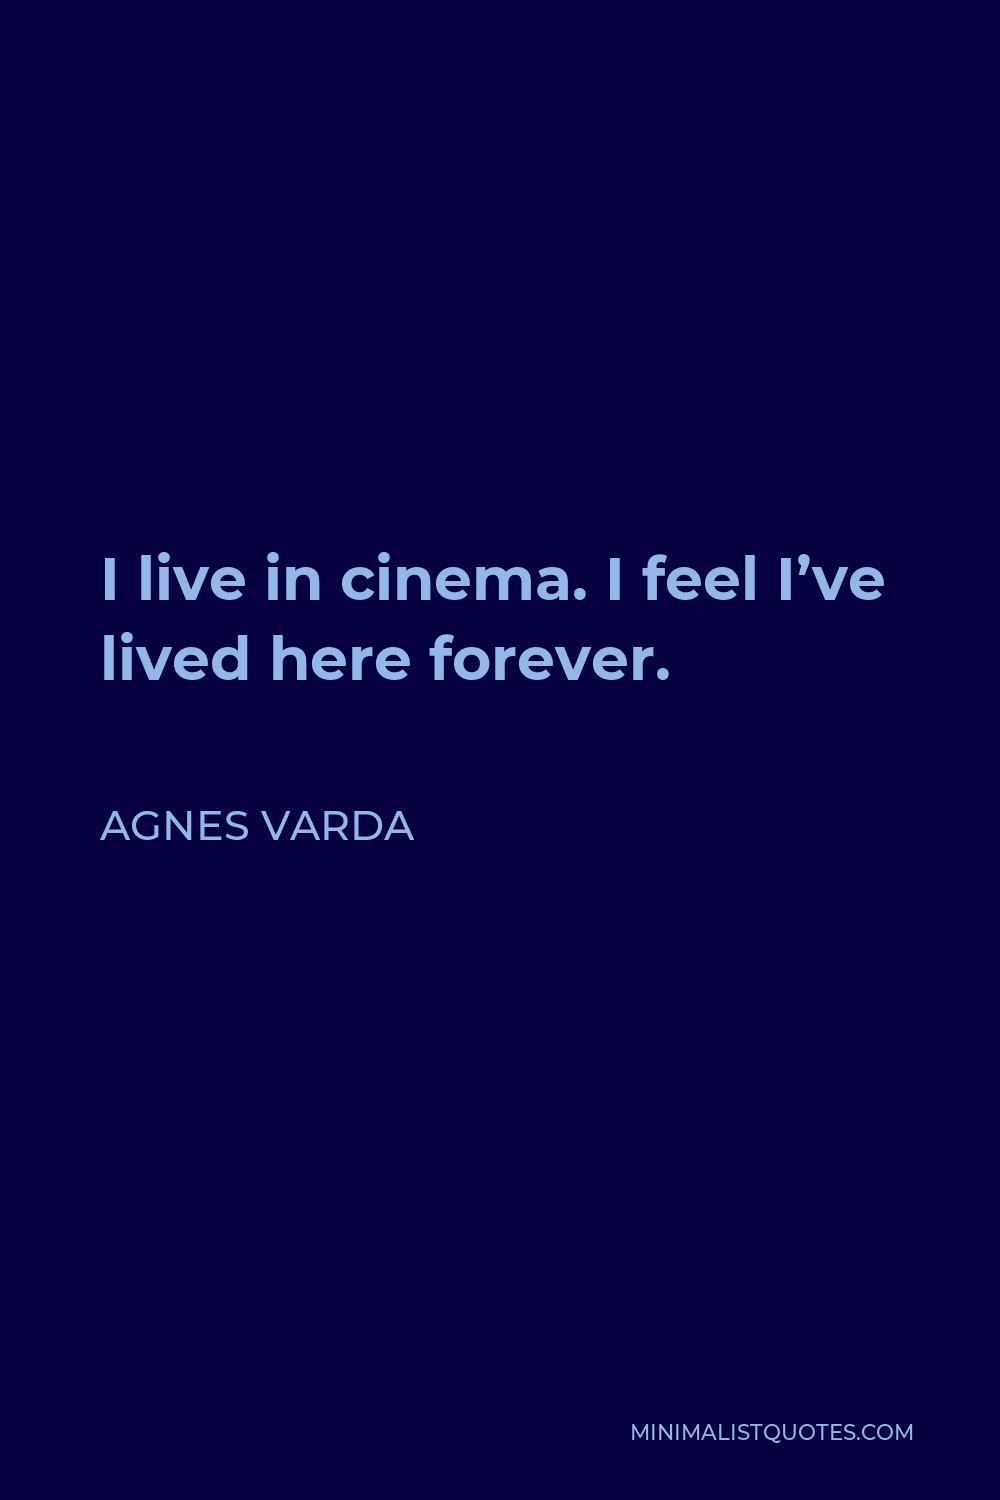 Agnes Varda Quote - I live in cinema. I feel I’ve lived here forever.